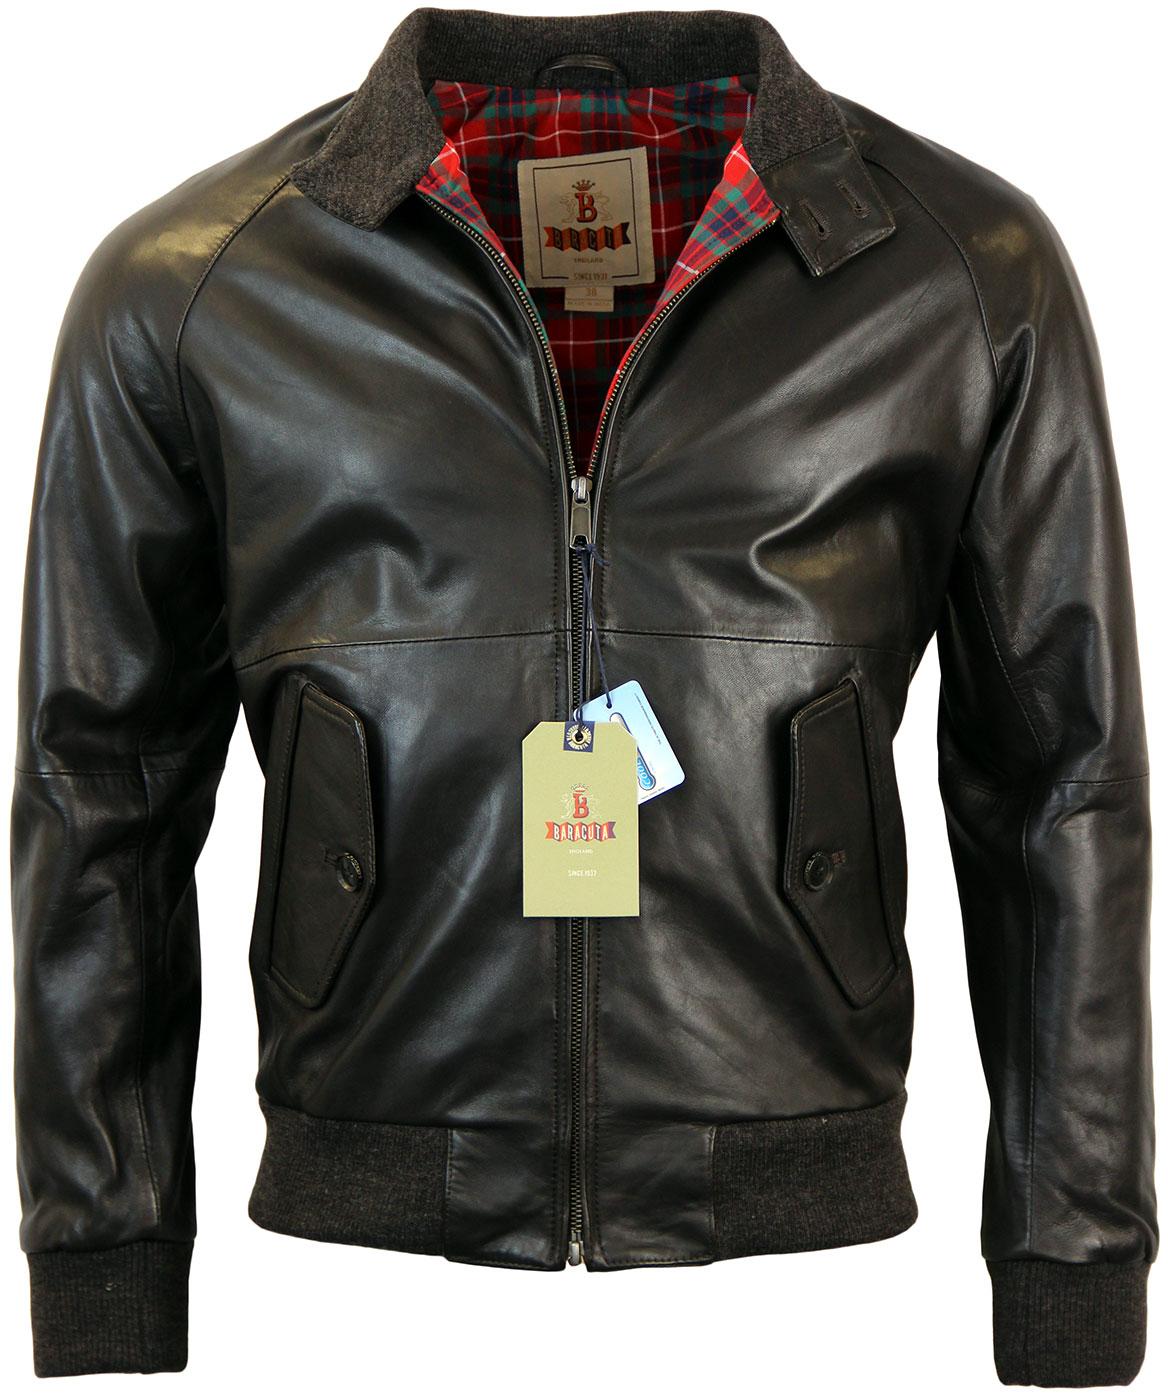 菅田将暉BARACUTA / G9 leather jacket